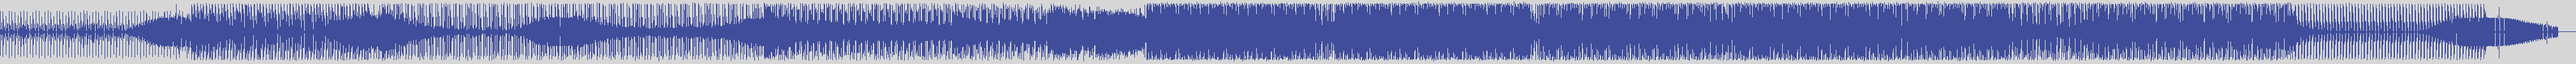 atomic_recordings [AR011] Alex Neri - Housetrack [Sebastian Ingrosso Remix] audio wave form